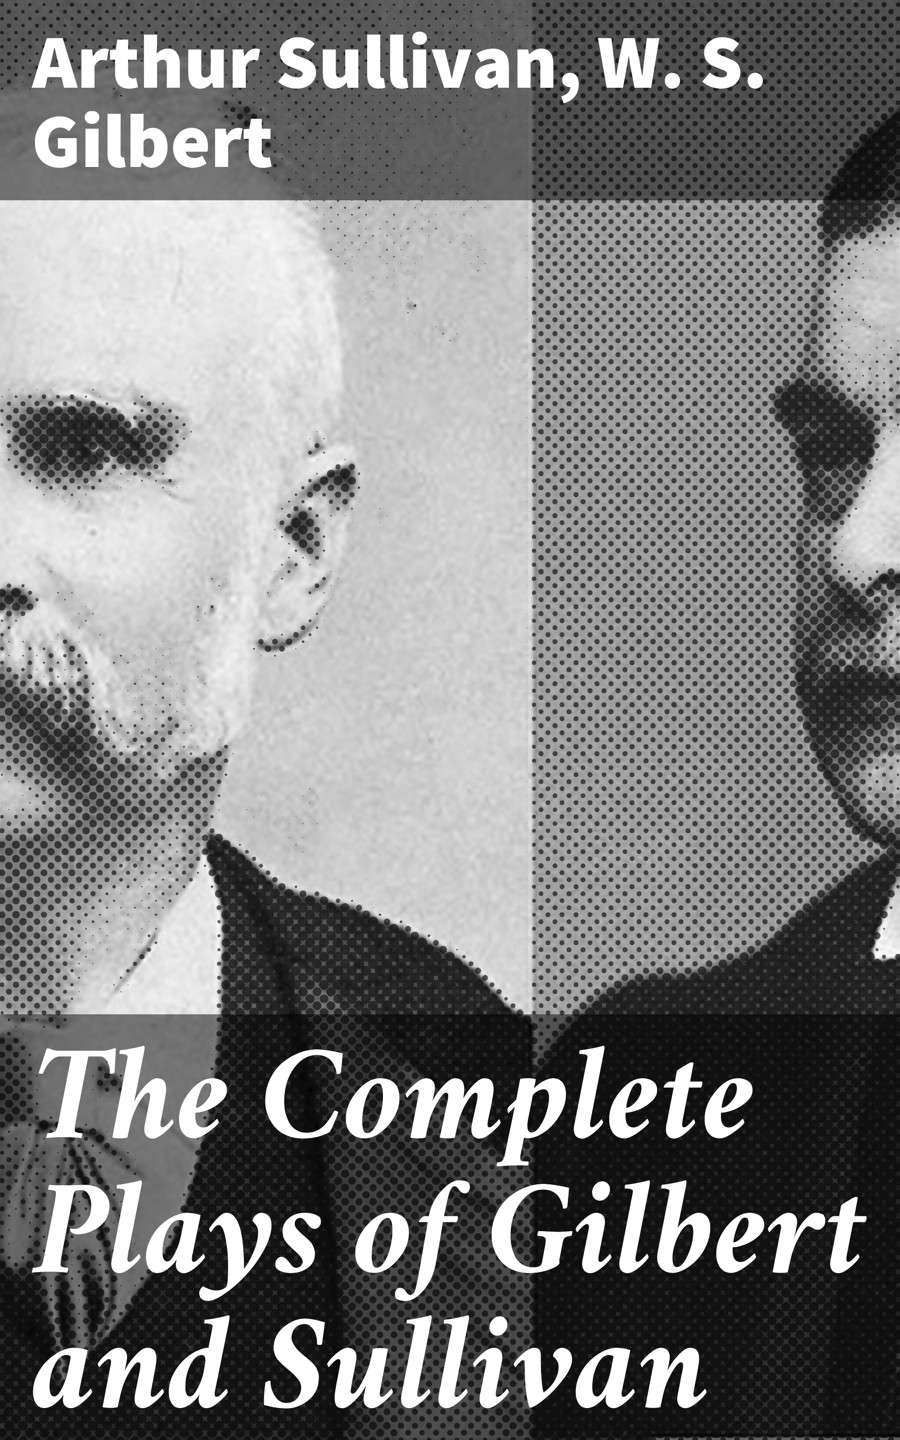 Arthur Sullivan The Complete Plays of Gilbert and Sullivan